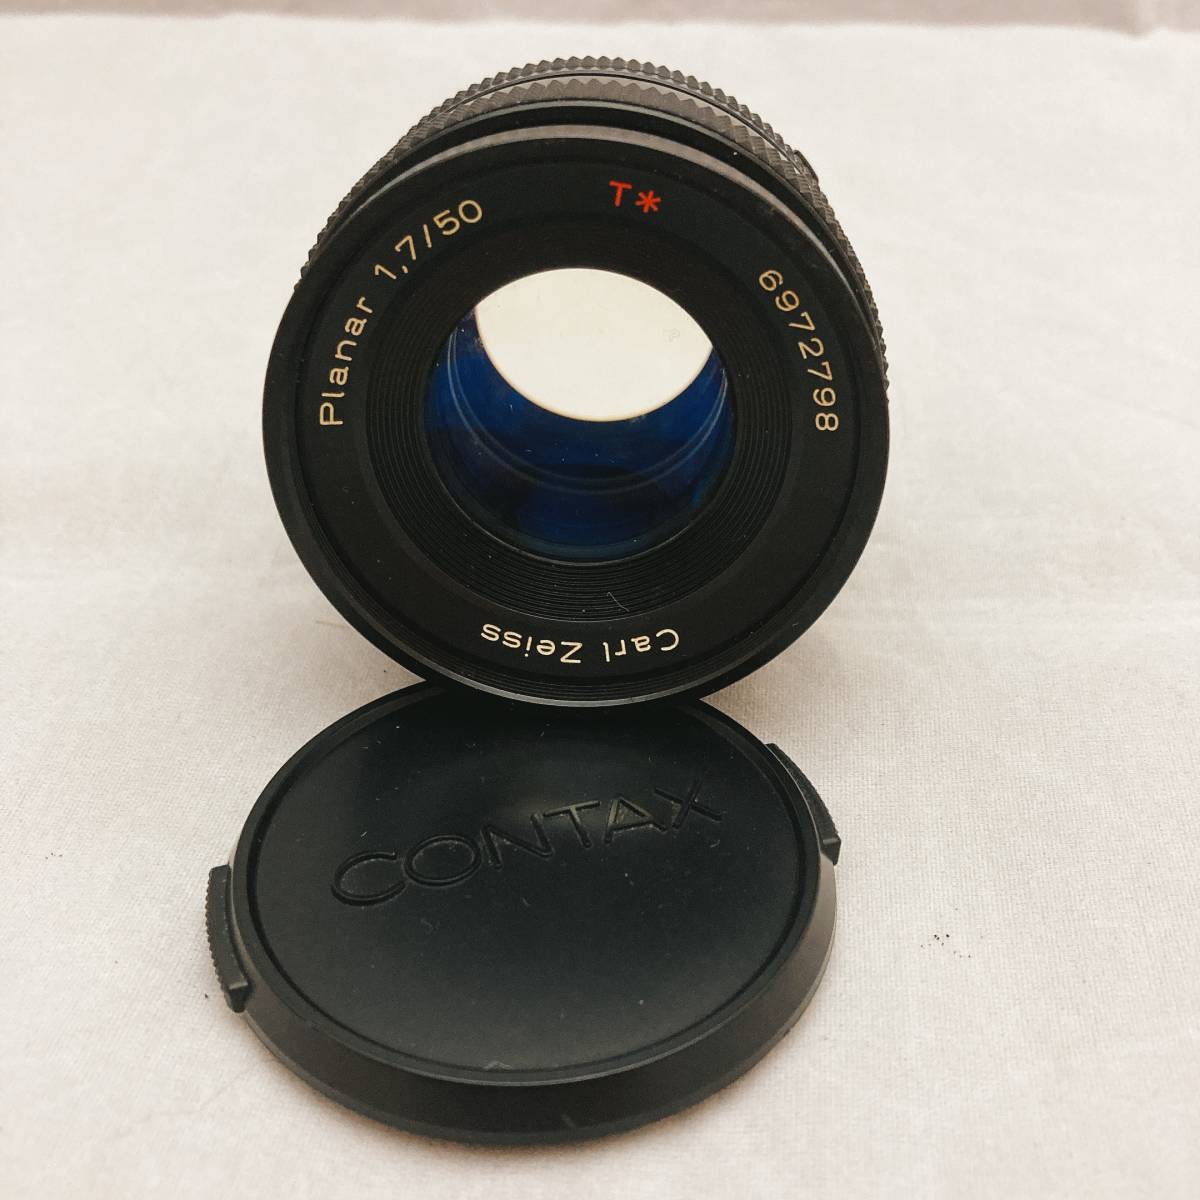 CONTAX コンタックス カールツァイス プラナー Carl Zeiss Planar 50mm F1.7 T MMJ 単焦点レンズ カメラ